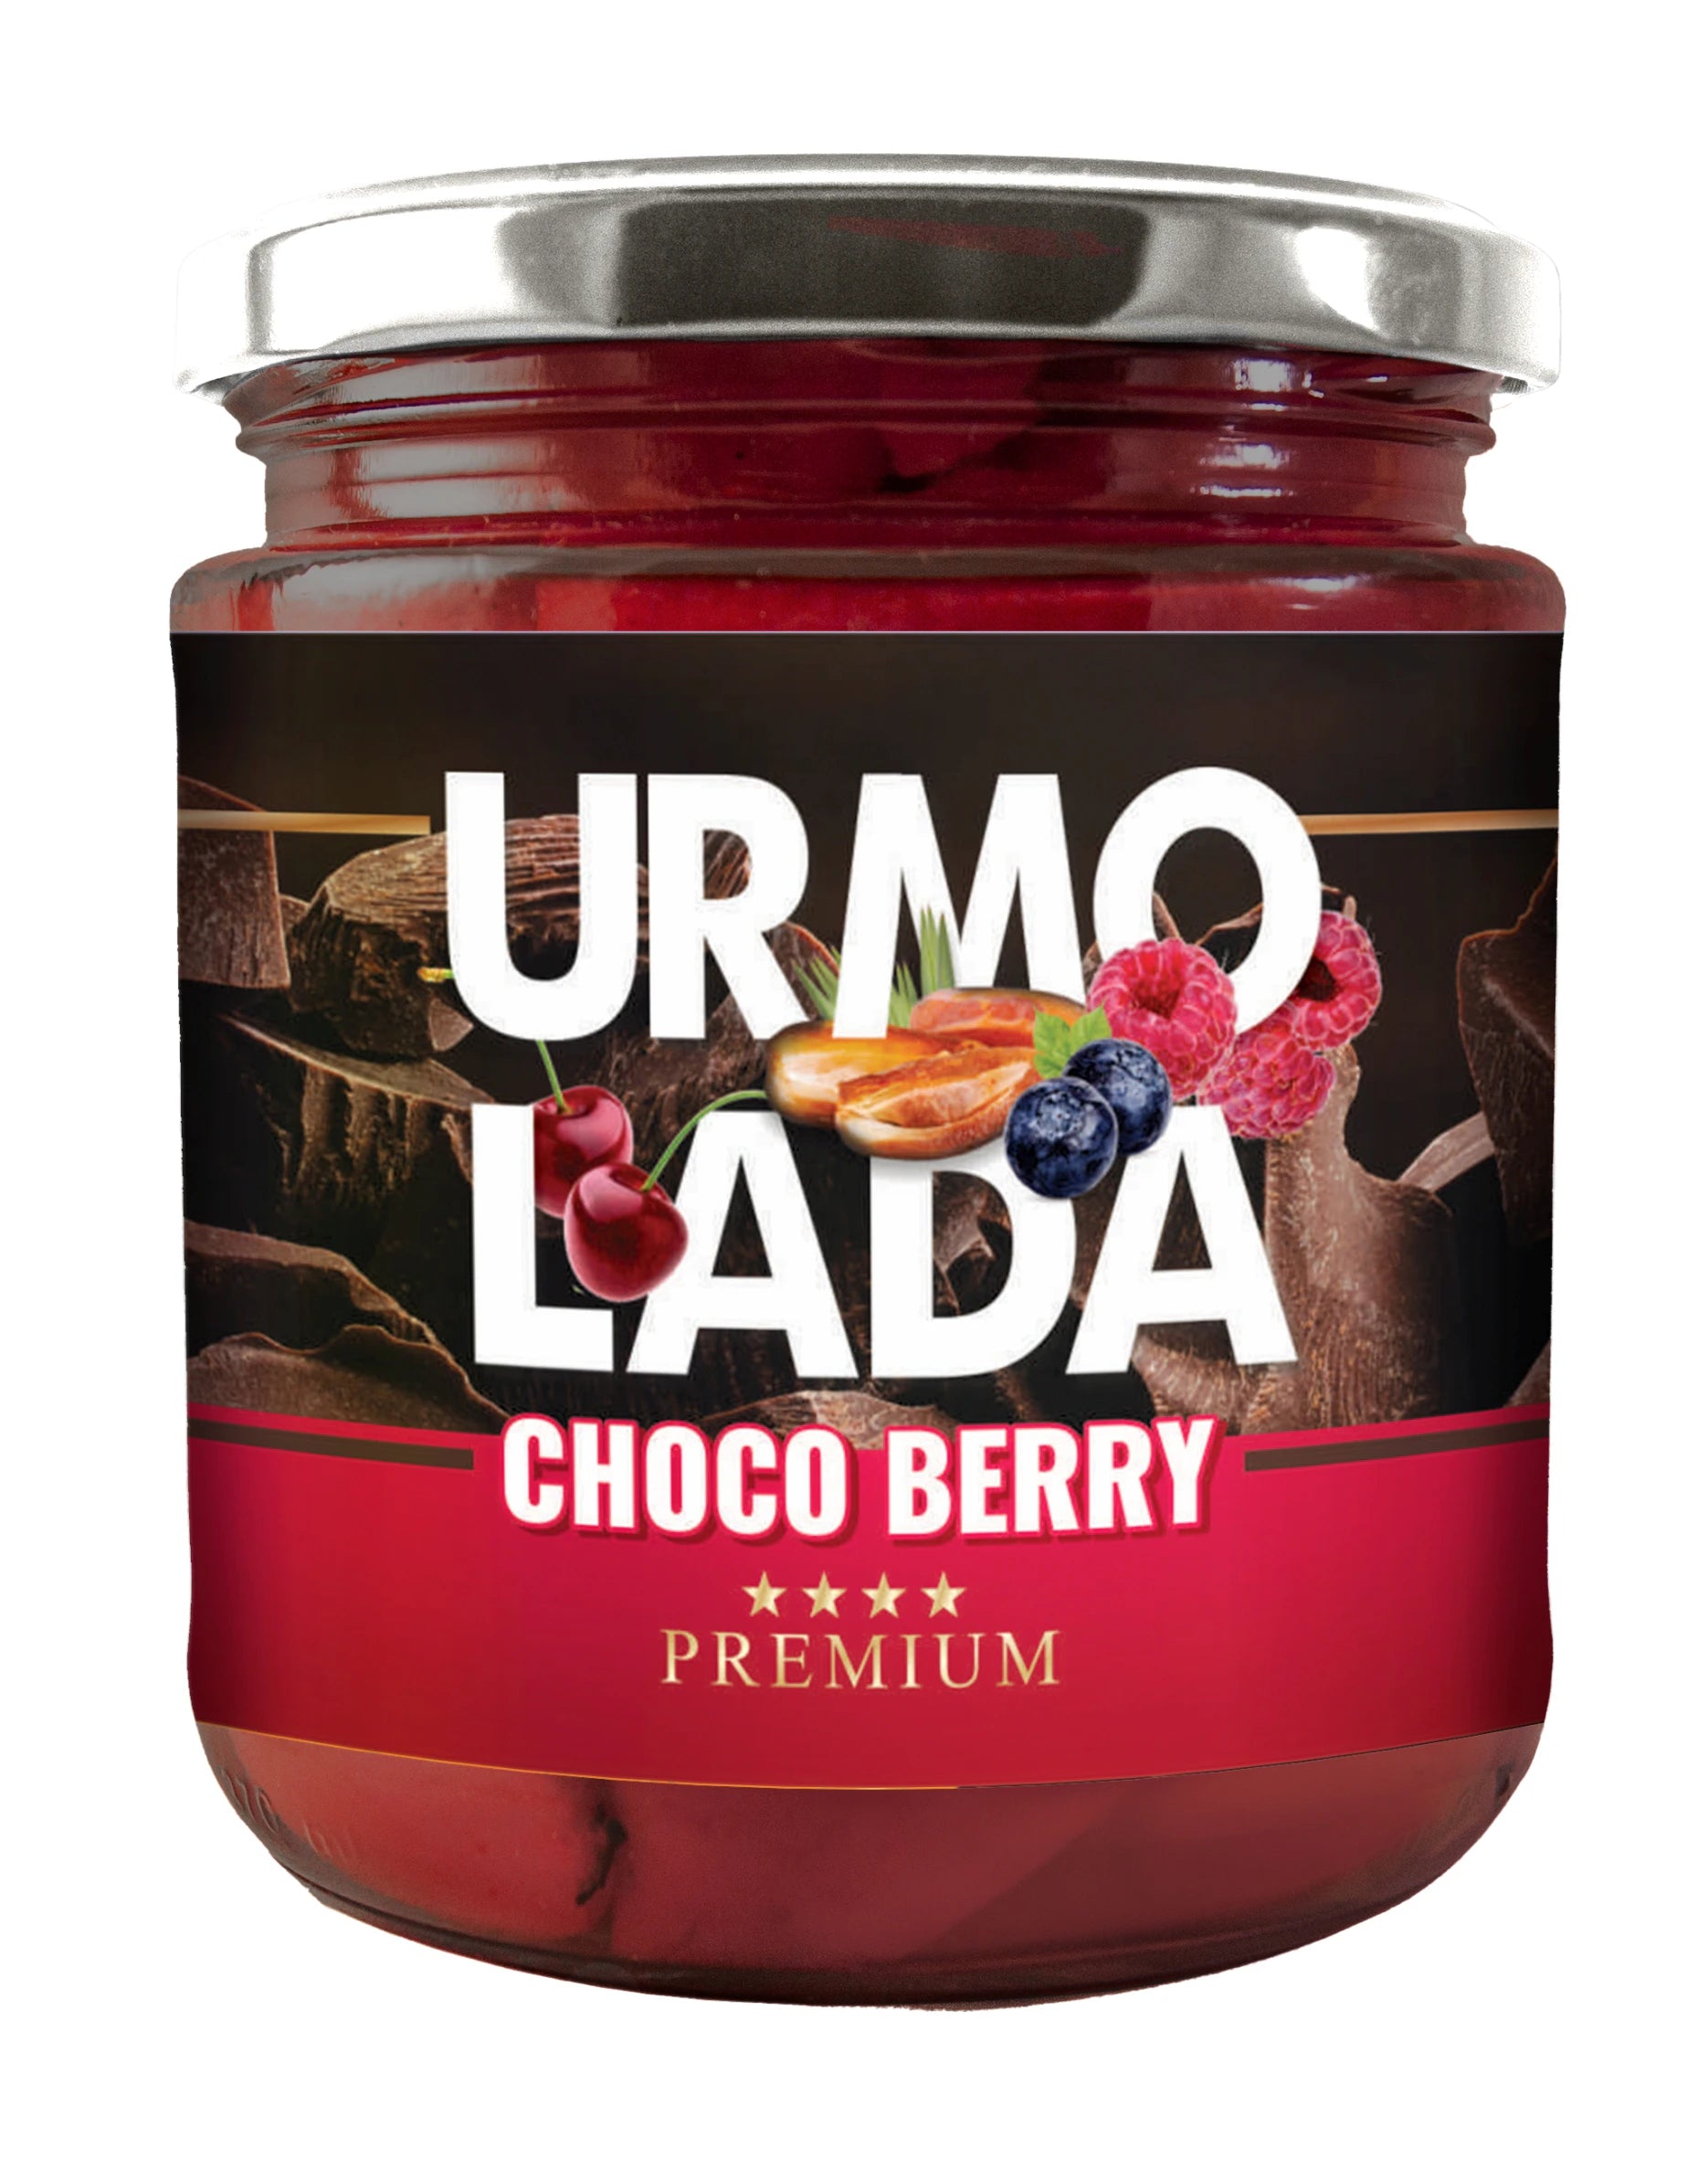 Urmolada Choco Berry